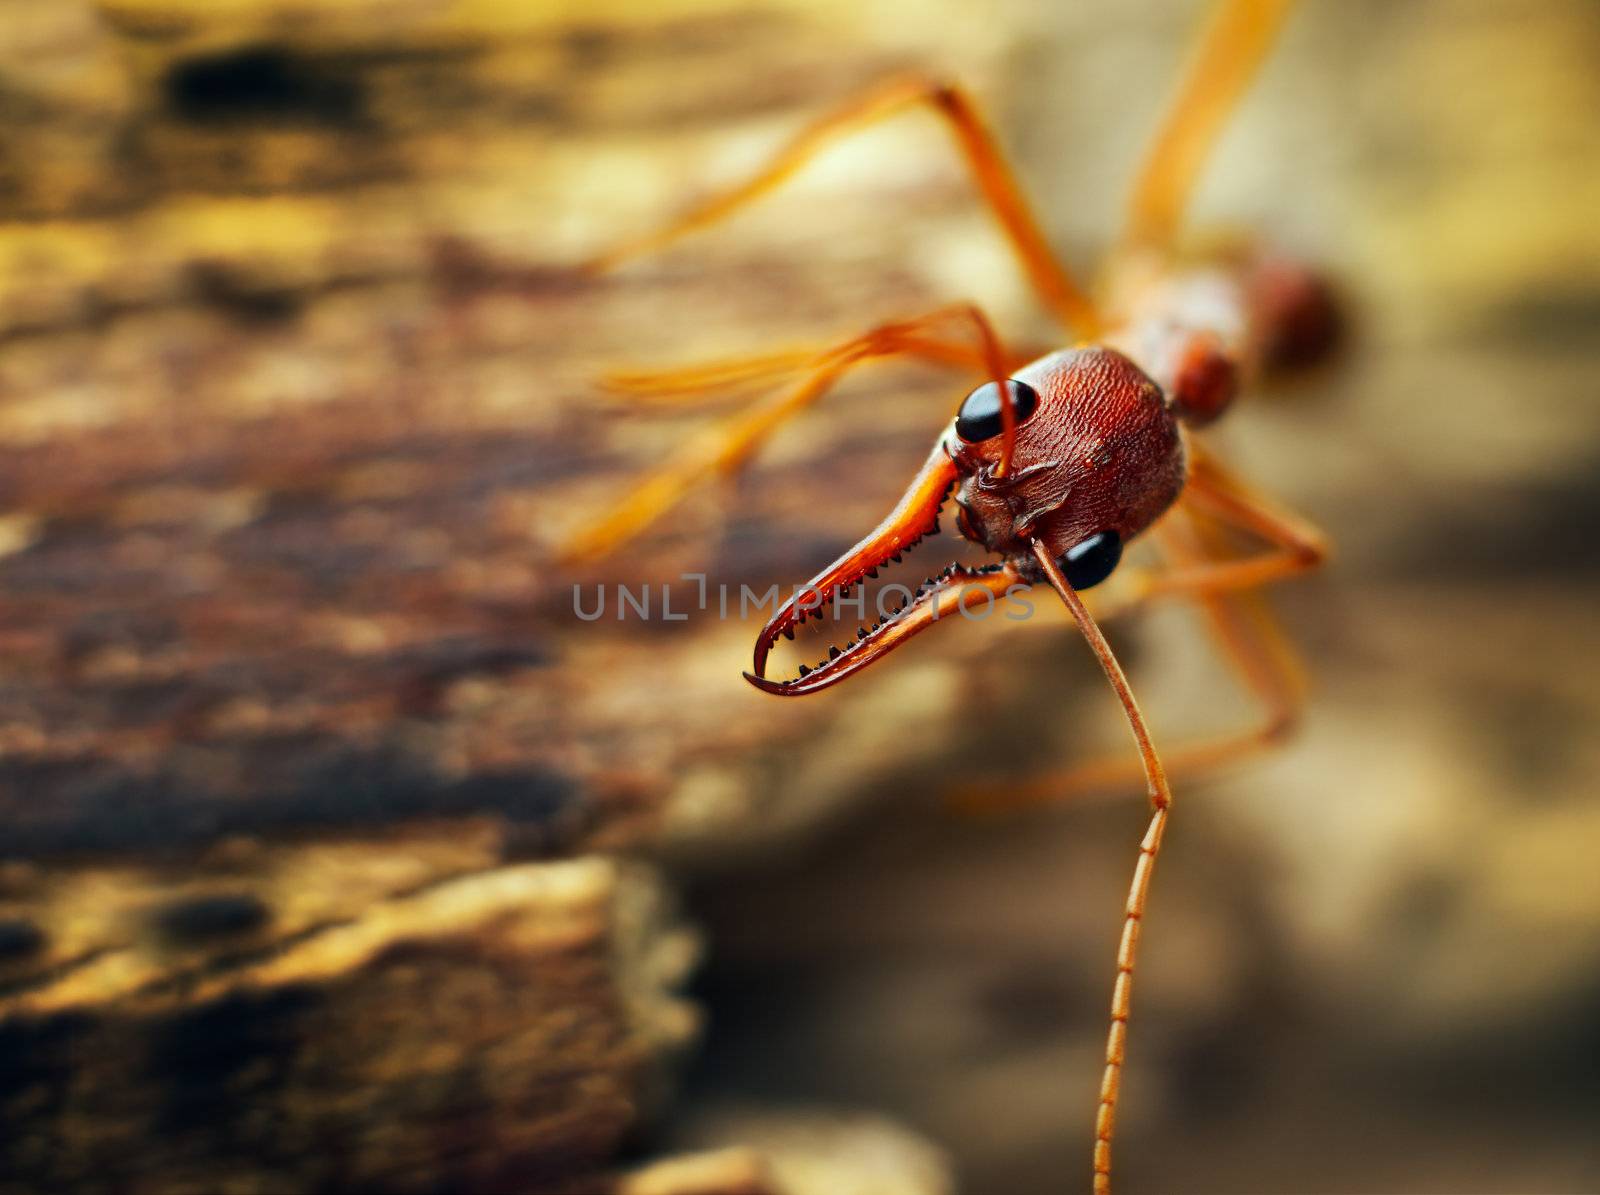 A giant bulldog ant (Myrmecia brevinoda) by Jaykayl